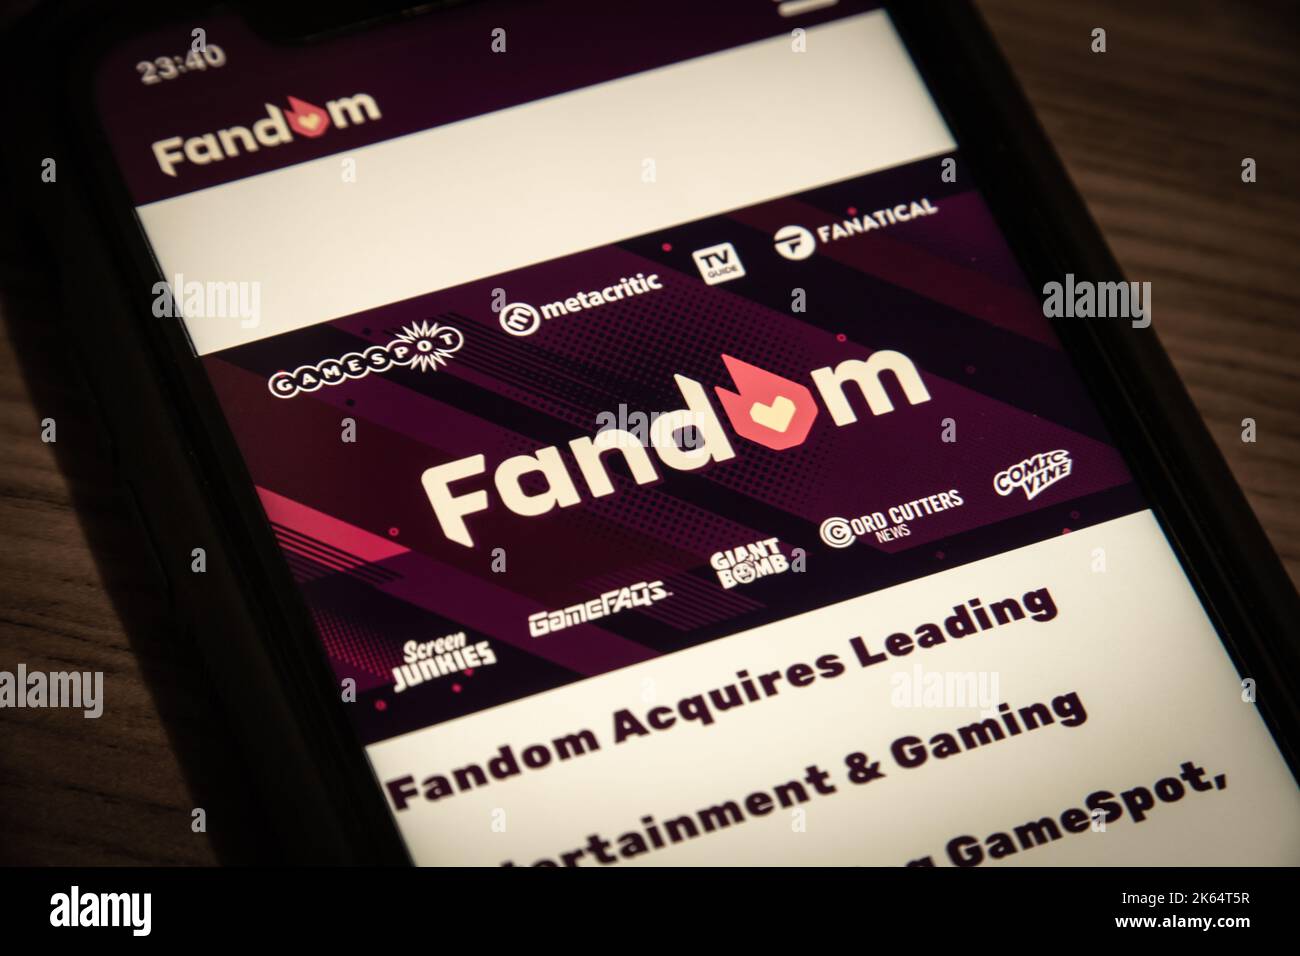 Post of Fandoms Buyout 7 Websites von Red Ventures (GameSpot, TV Guide, Giant Bomb, Cord Cutters News, GameFAQs, Metacritic & Comic Vine) auf dem iPhone Stockfoto